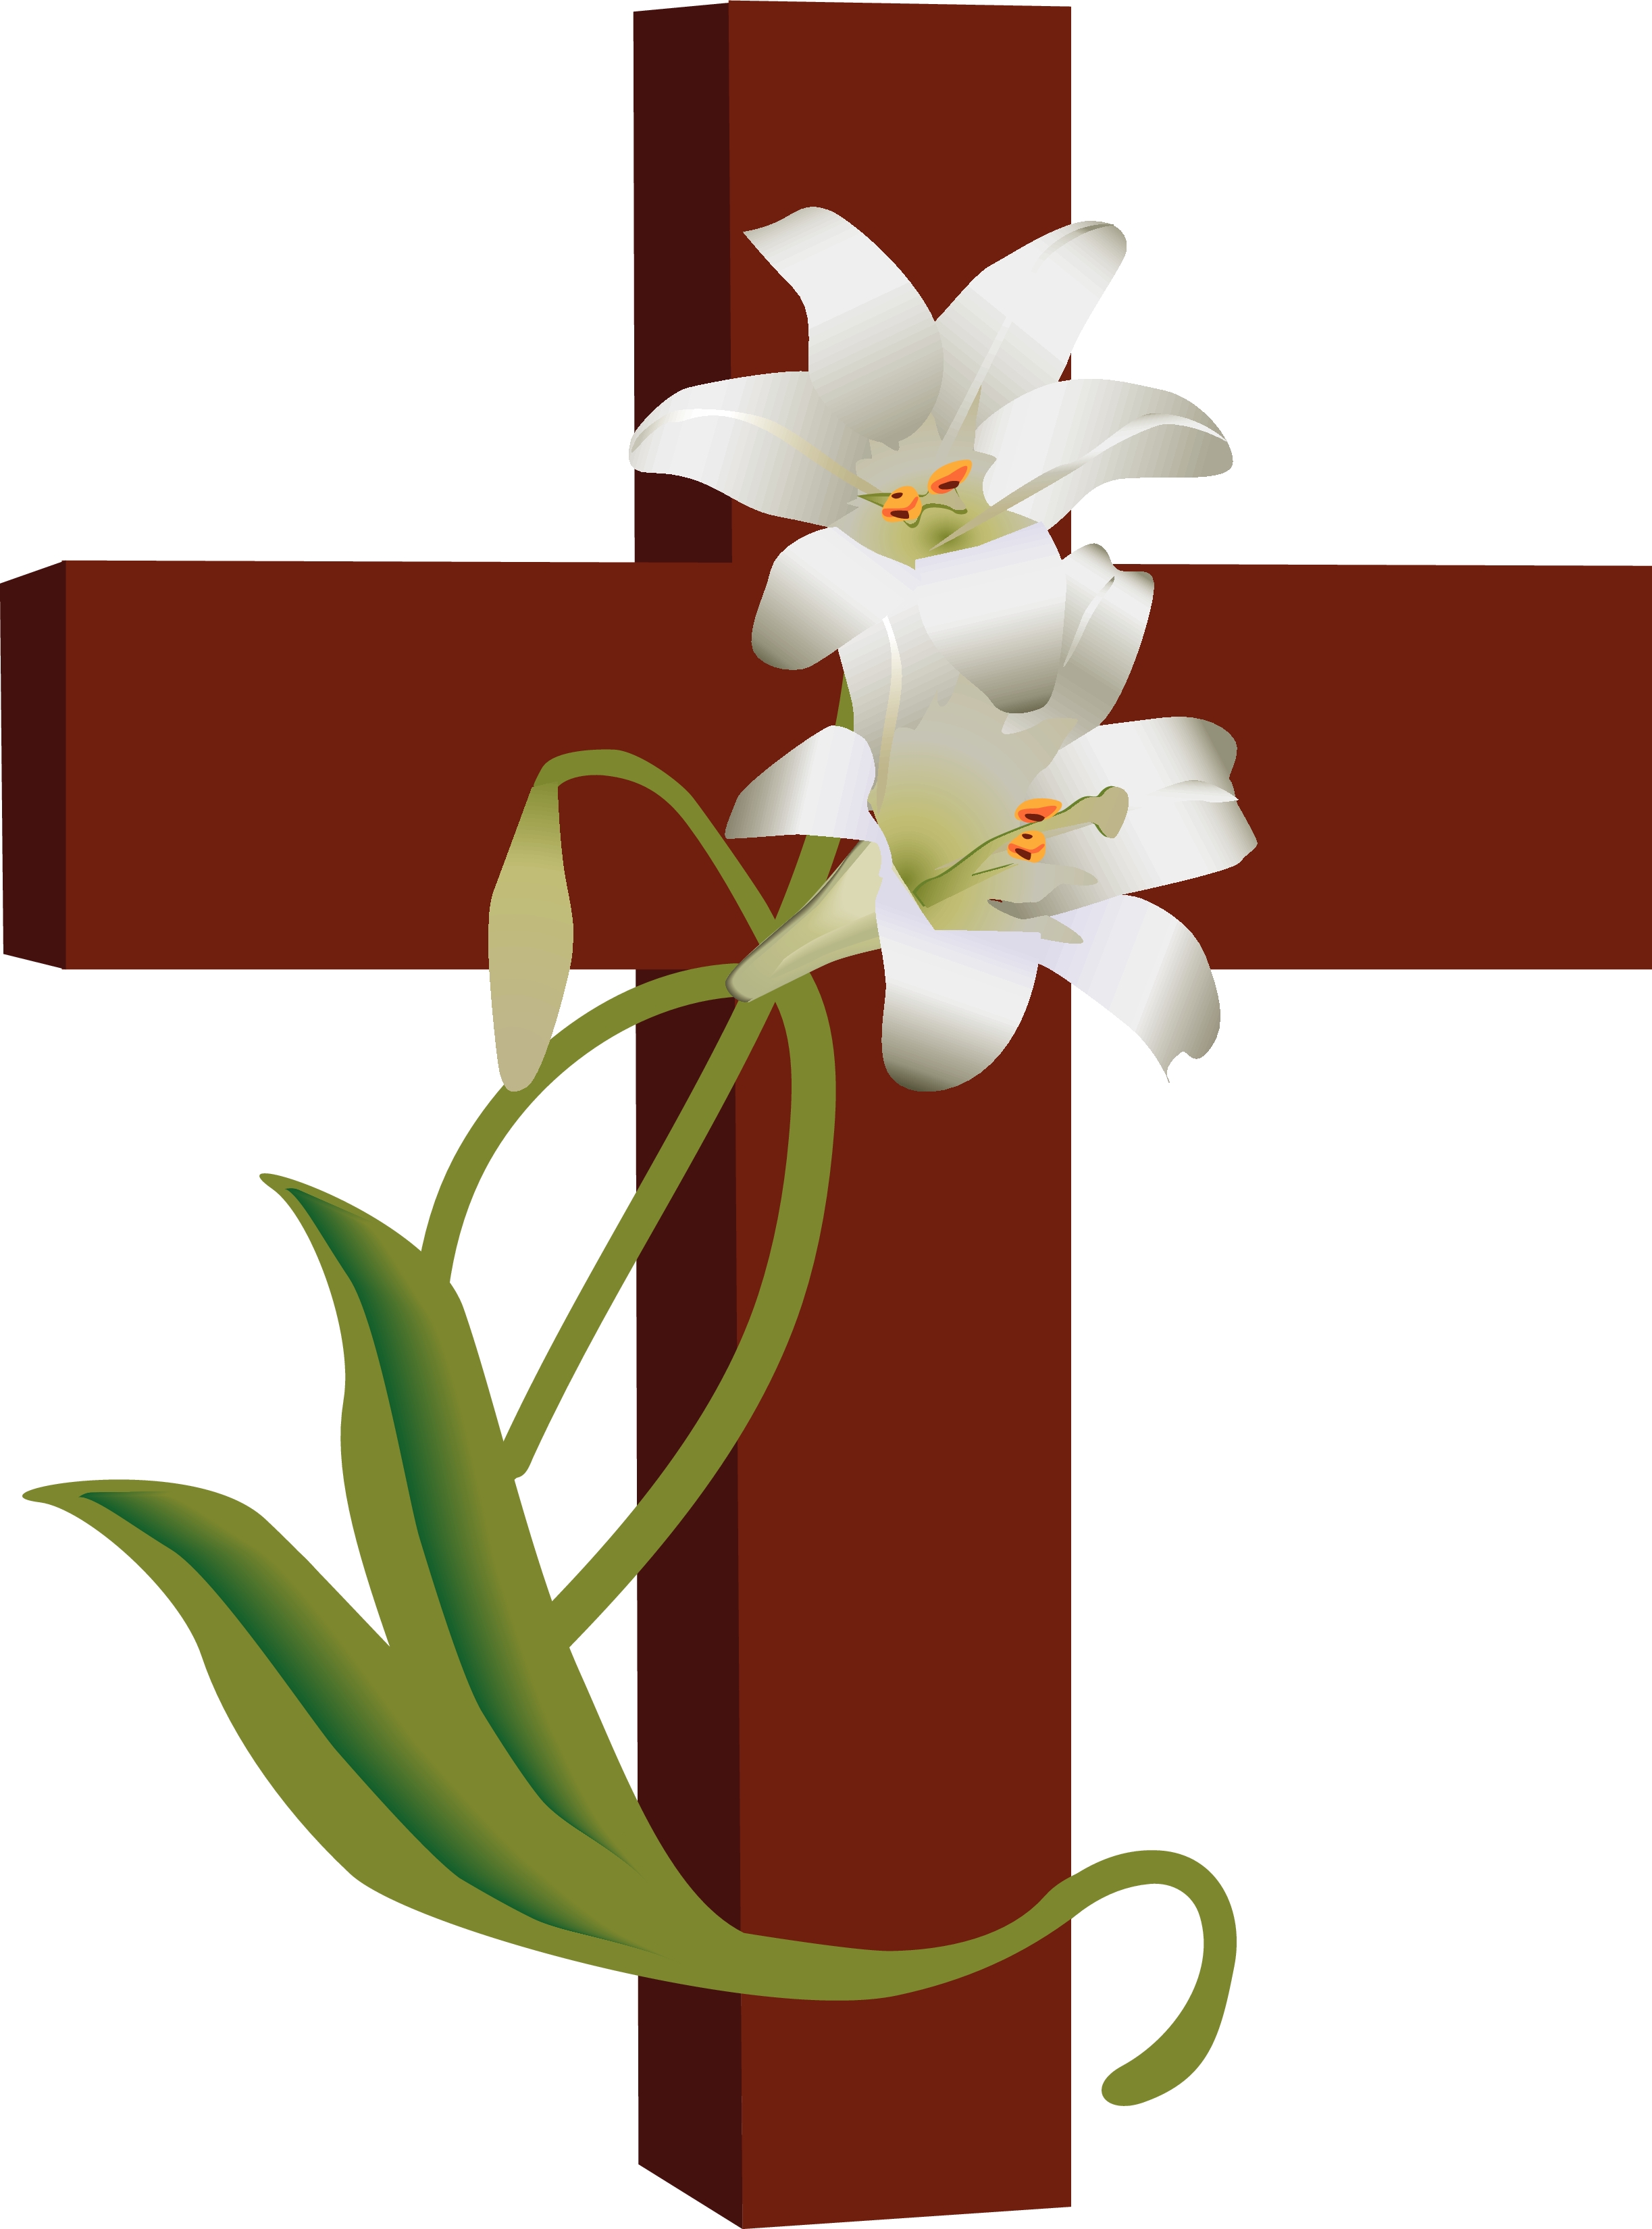 http://www.fumcofspringboro.org/hp_wordpress/wp-content/uploads/2013/03/Cross-with-Lilies-Clipart-1.jpg